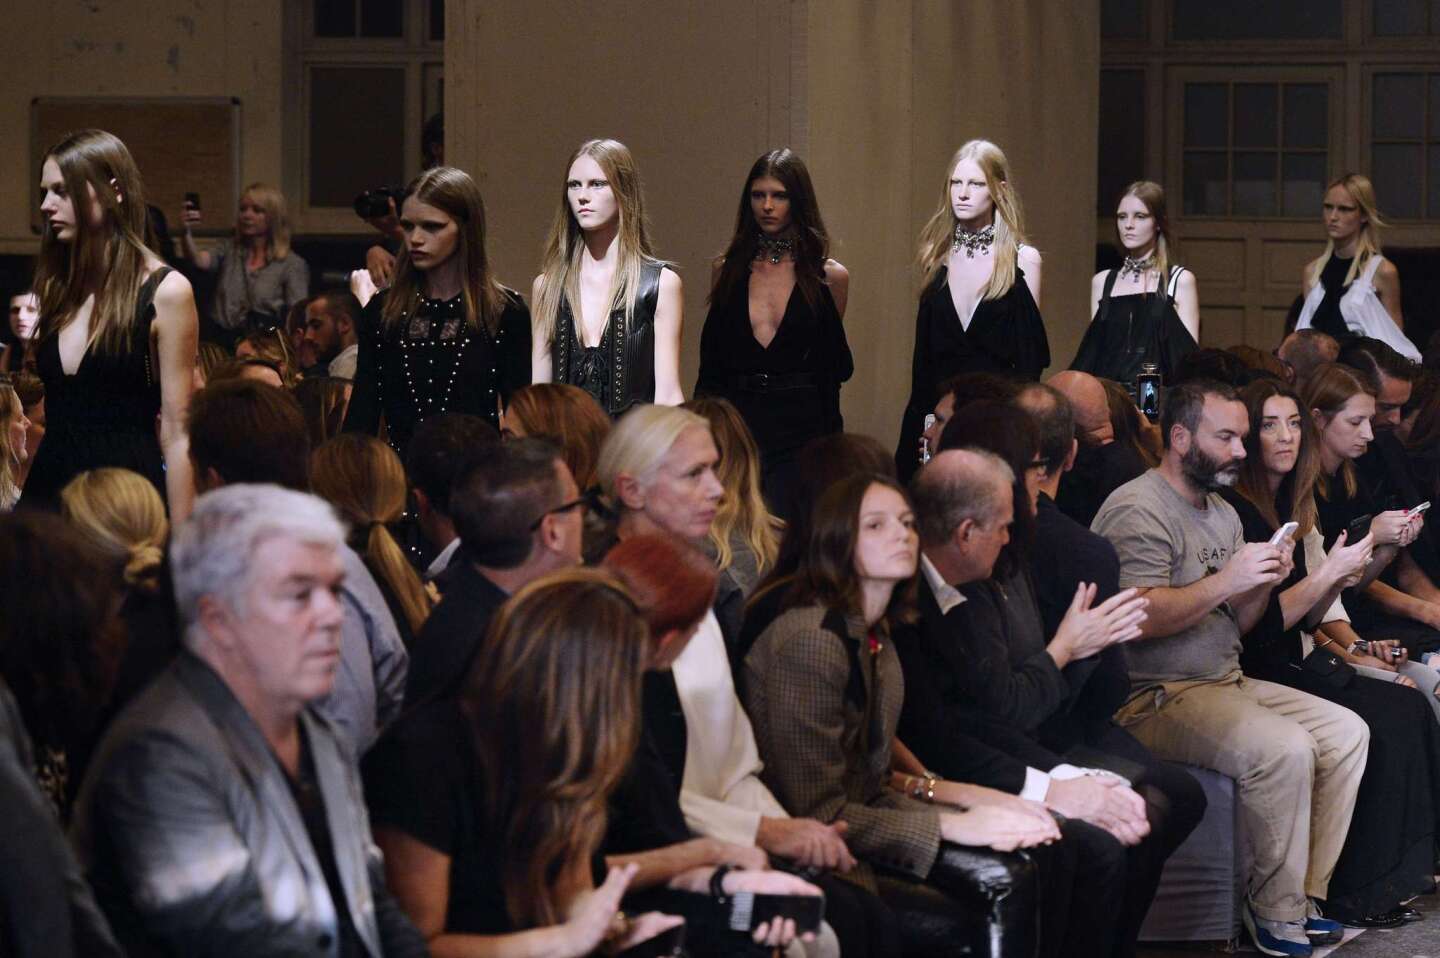 Paris Fashion Week: Givenchy